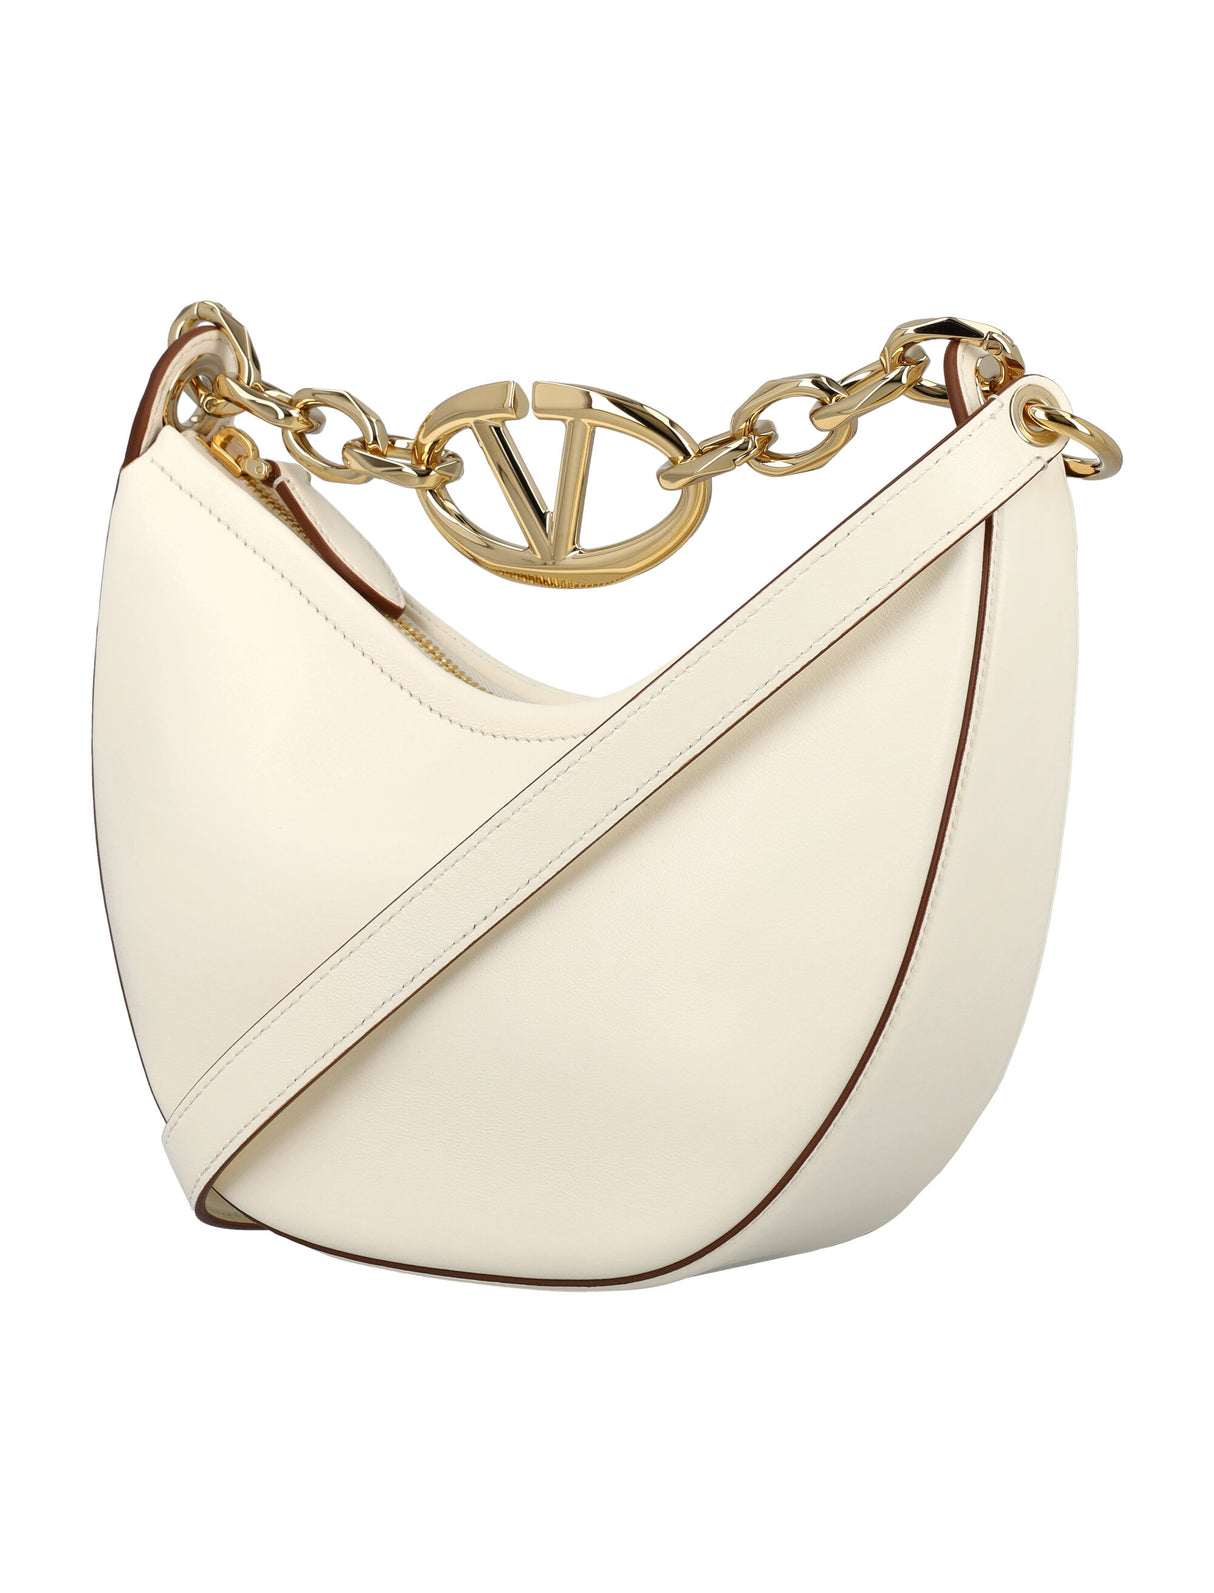 VALENTINO GARAVANI Mini VLogo Moon Hobo Chain Handbag in White Lamb Leather with Adjustable Strap, 16x21x7 cm